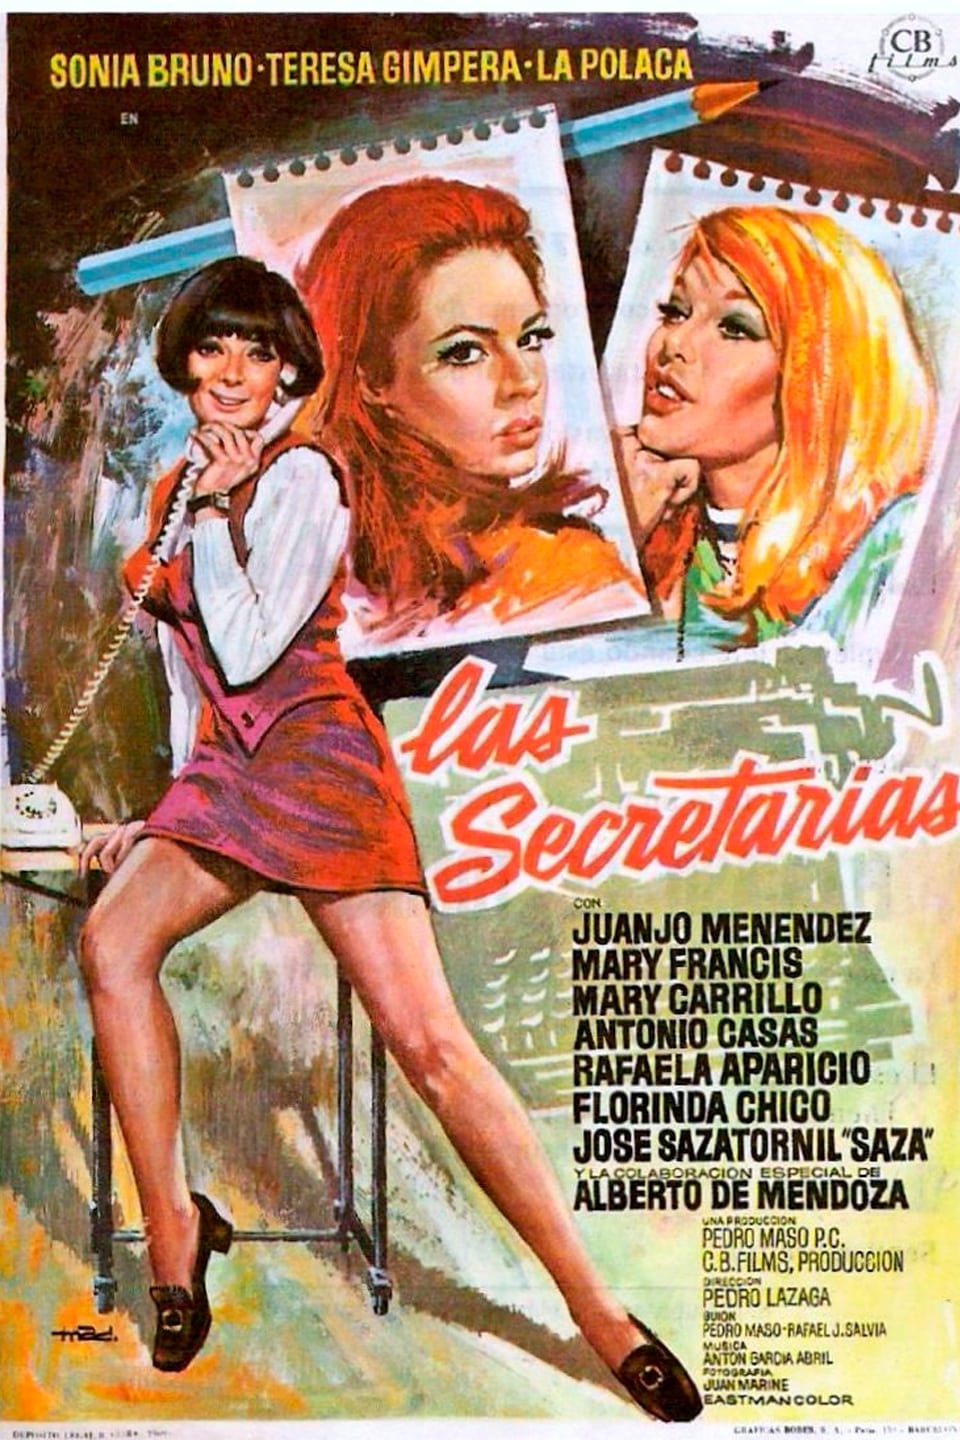 Las secretarias (1968)